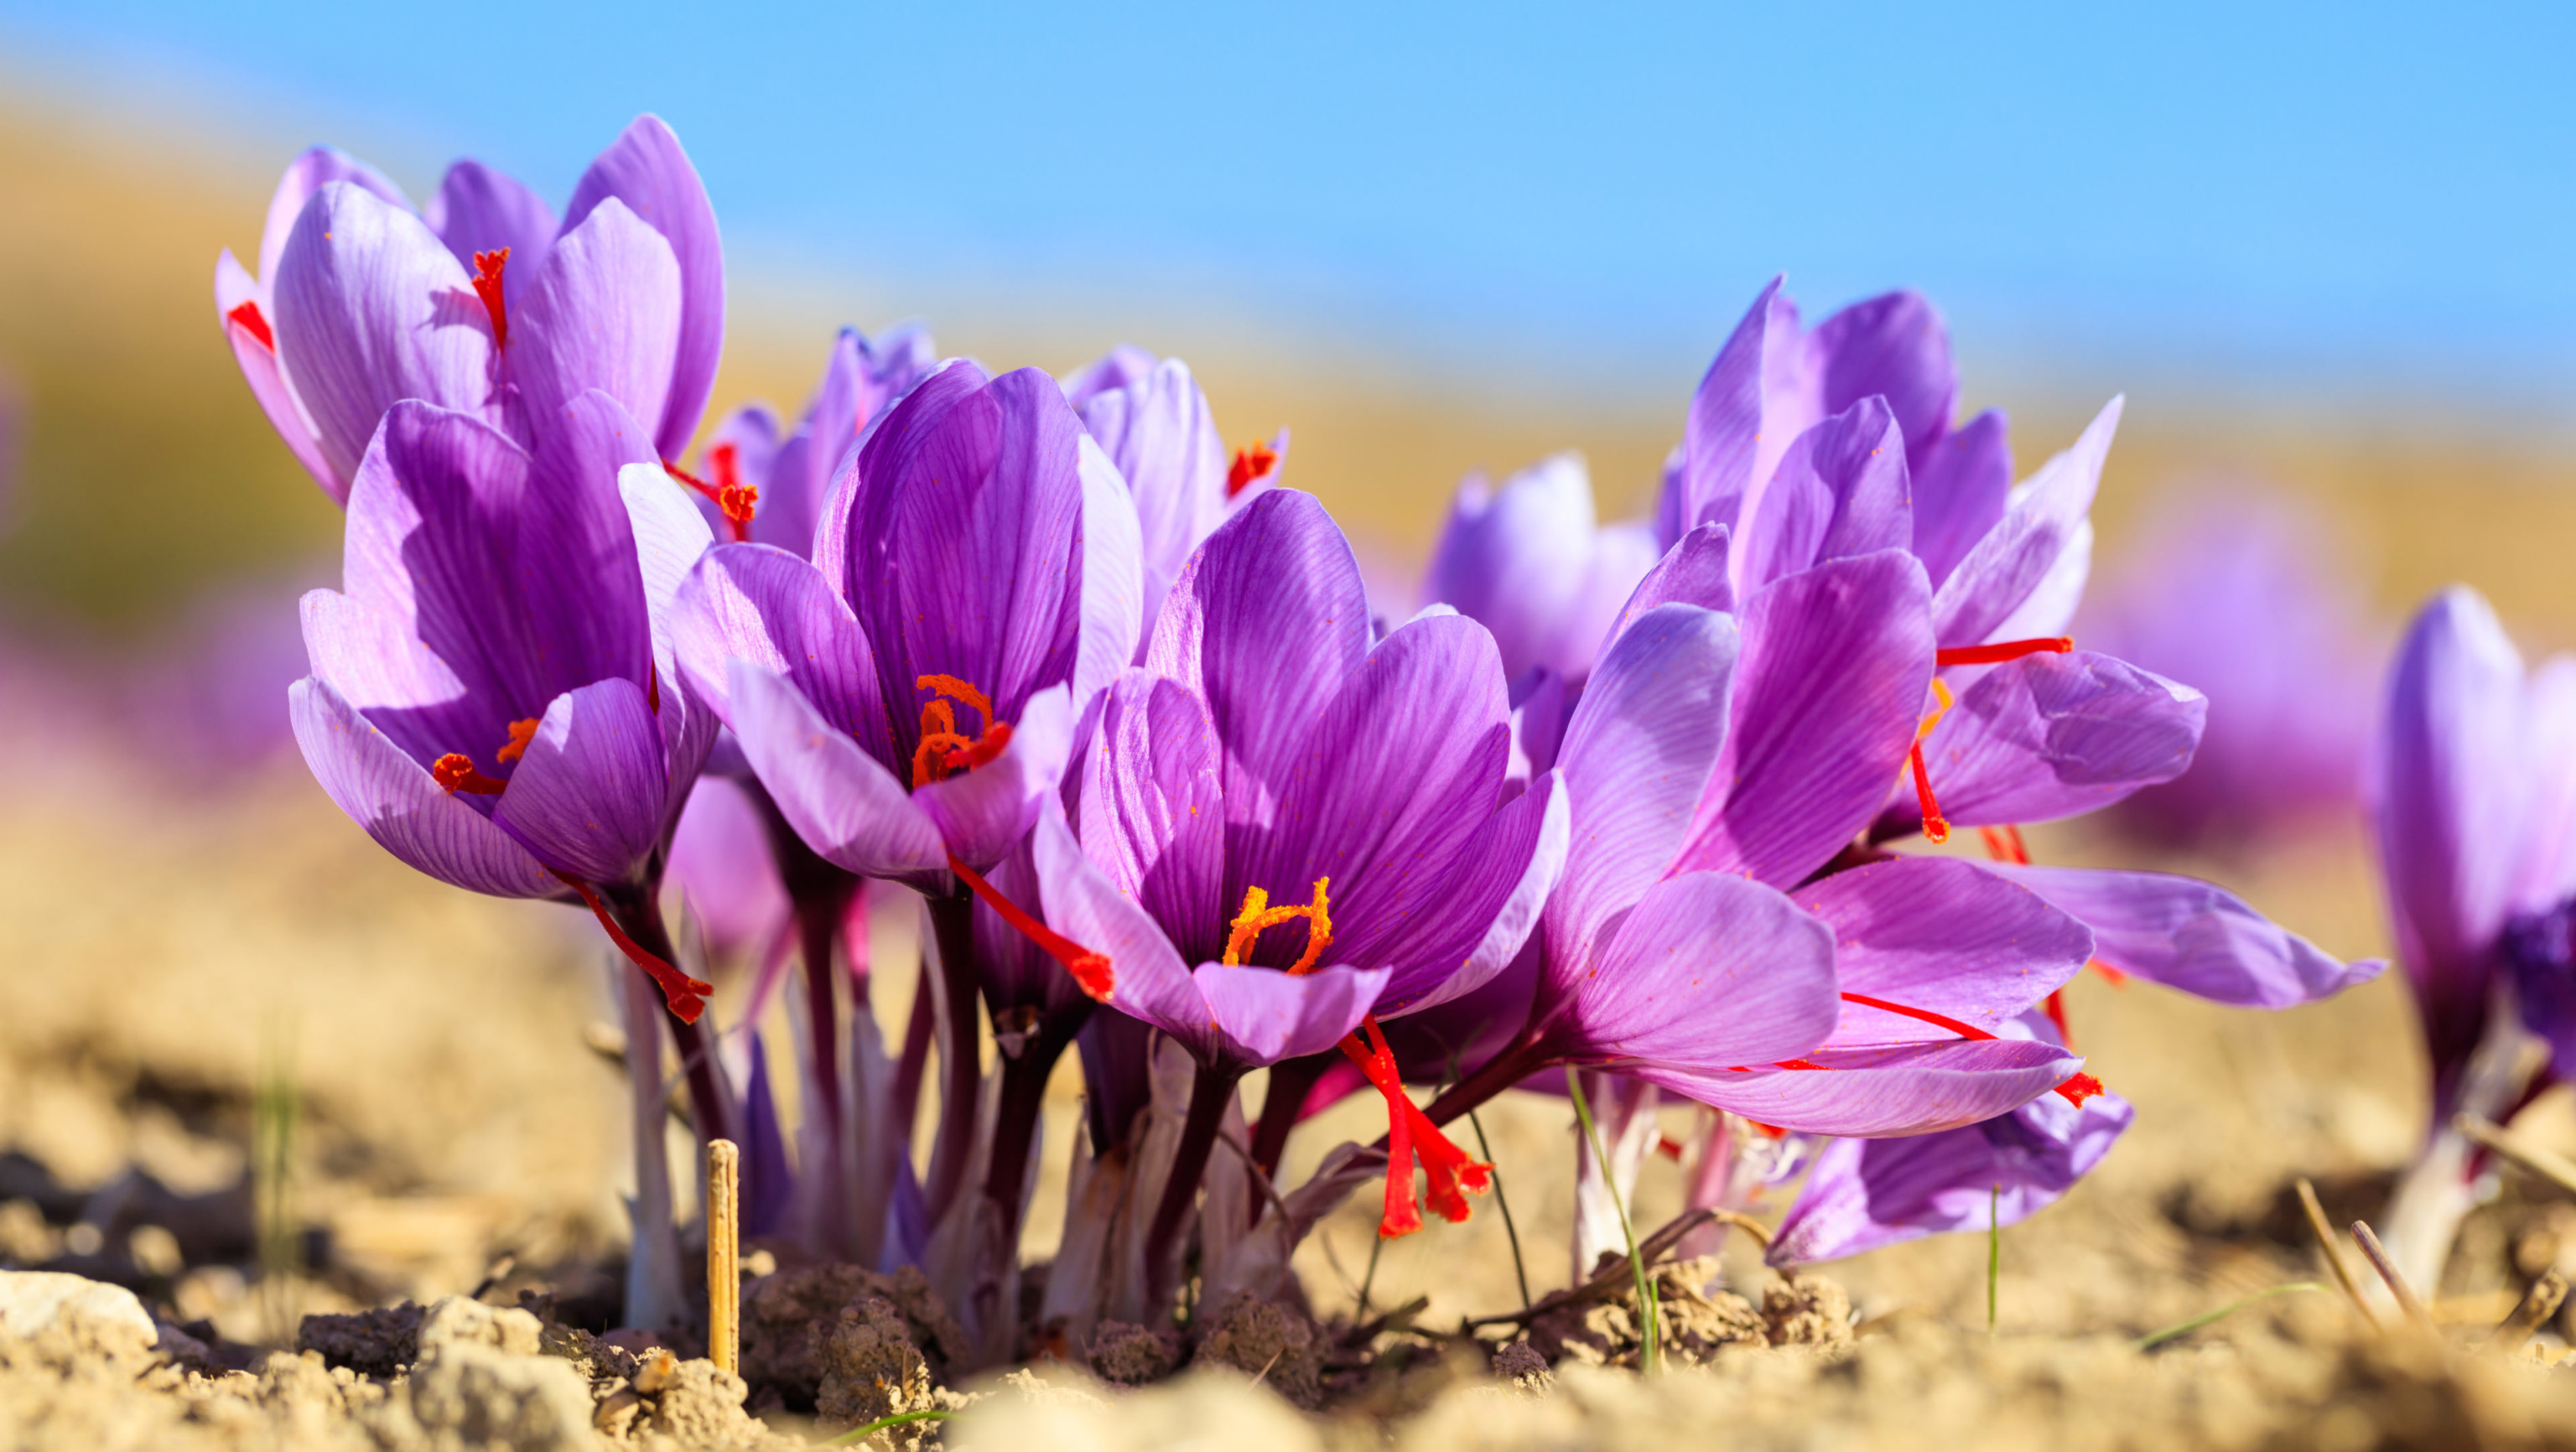 Kozani, the only region in Greece where saffron is grown - Poupadou